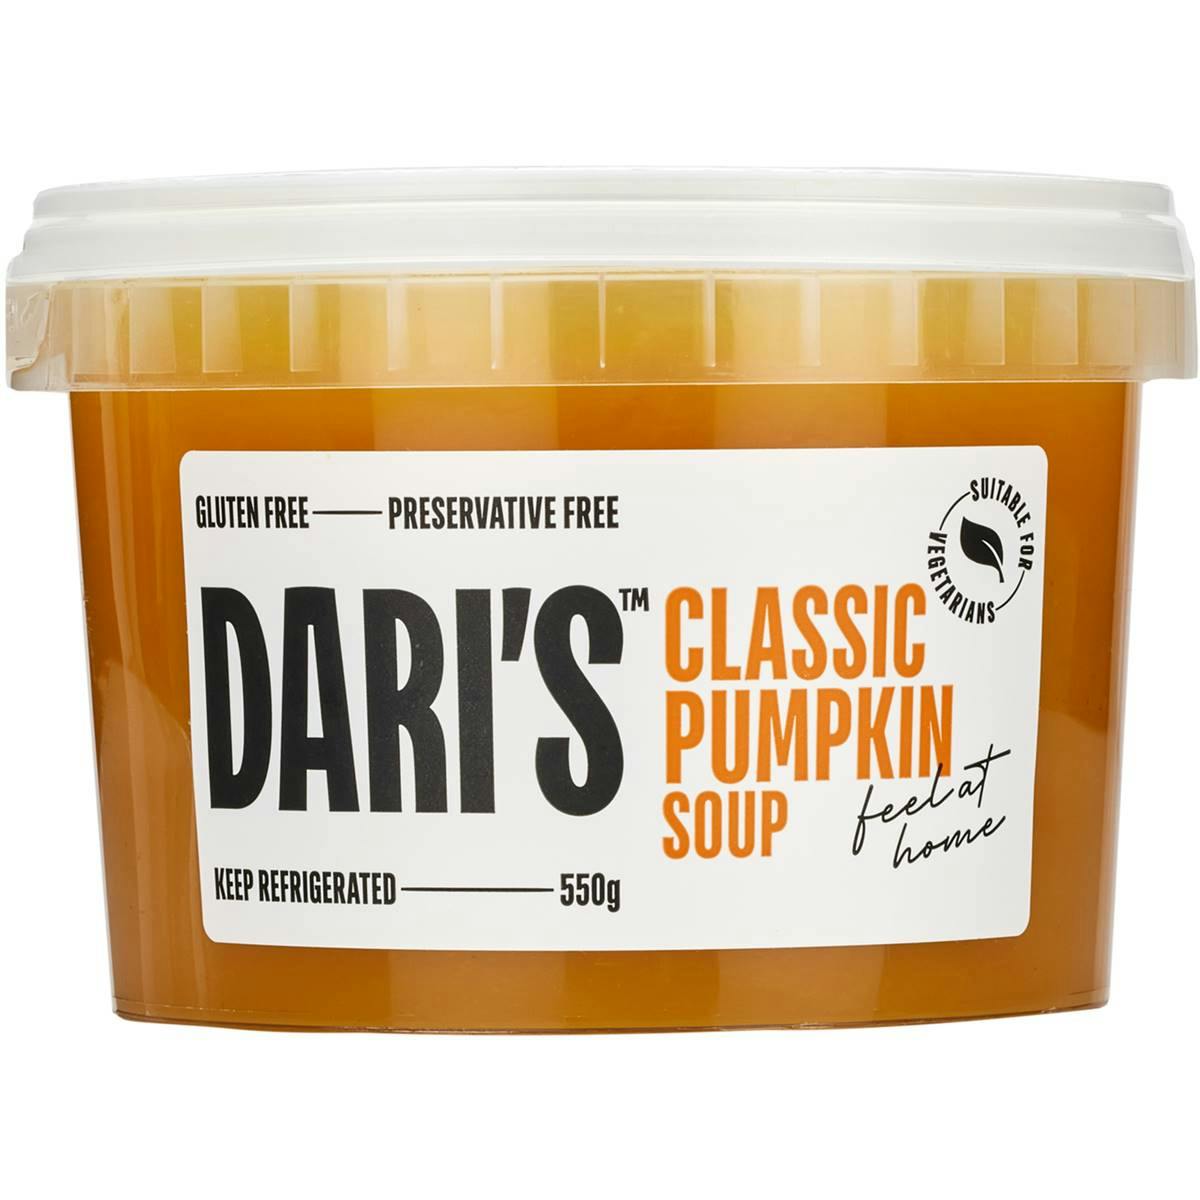 Dari's Classic Pumpkin Soup